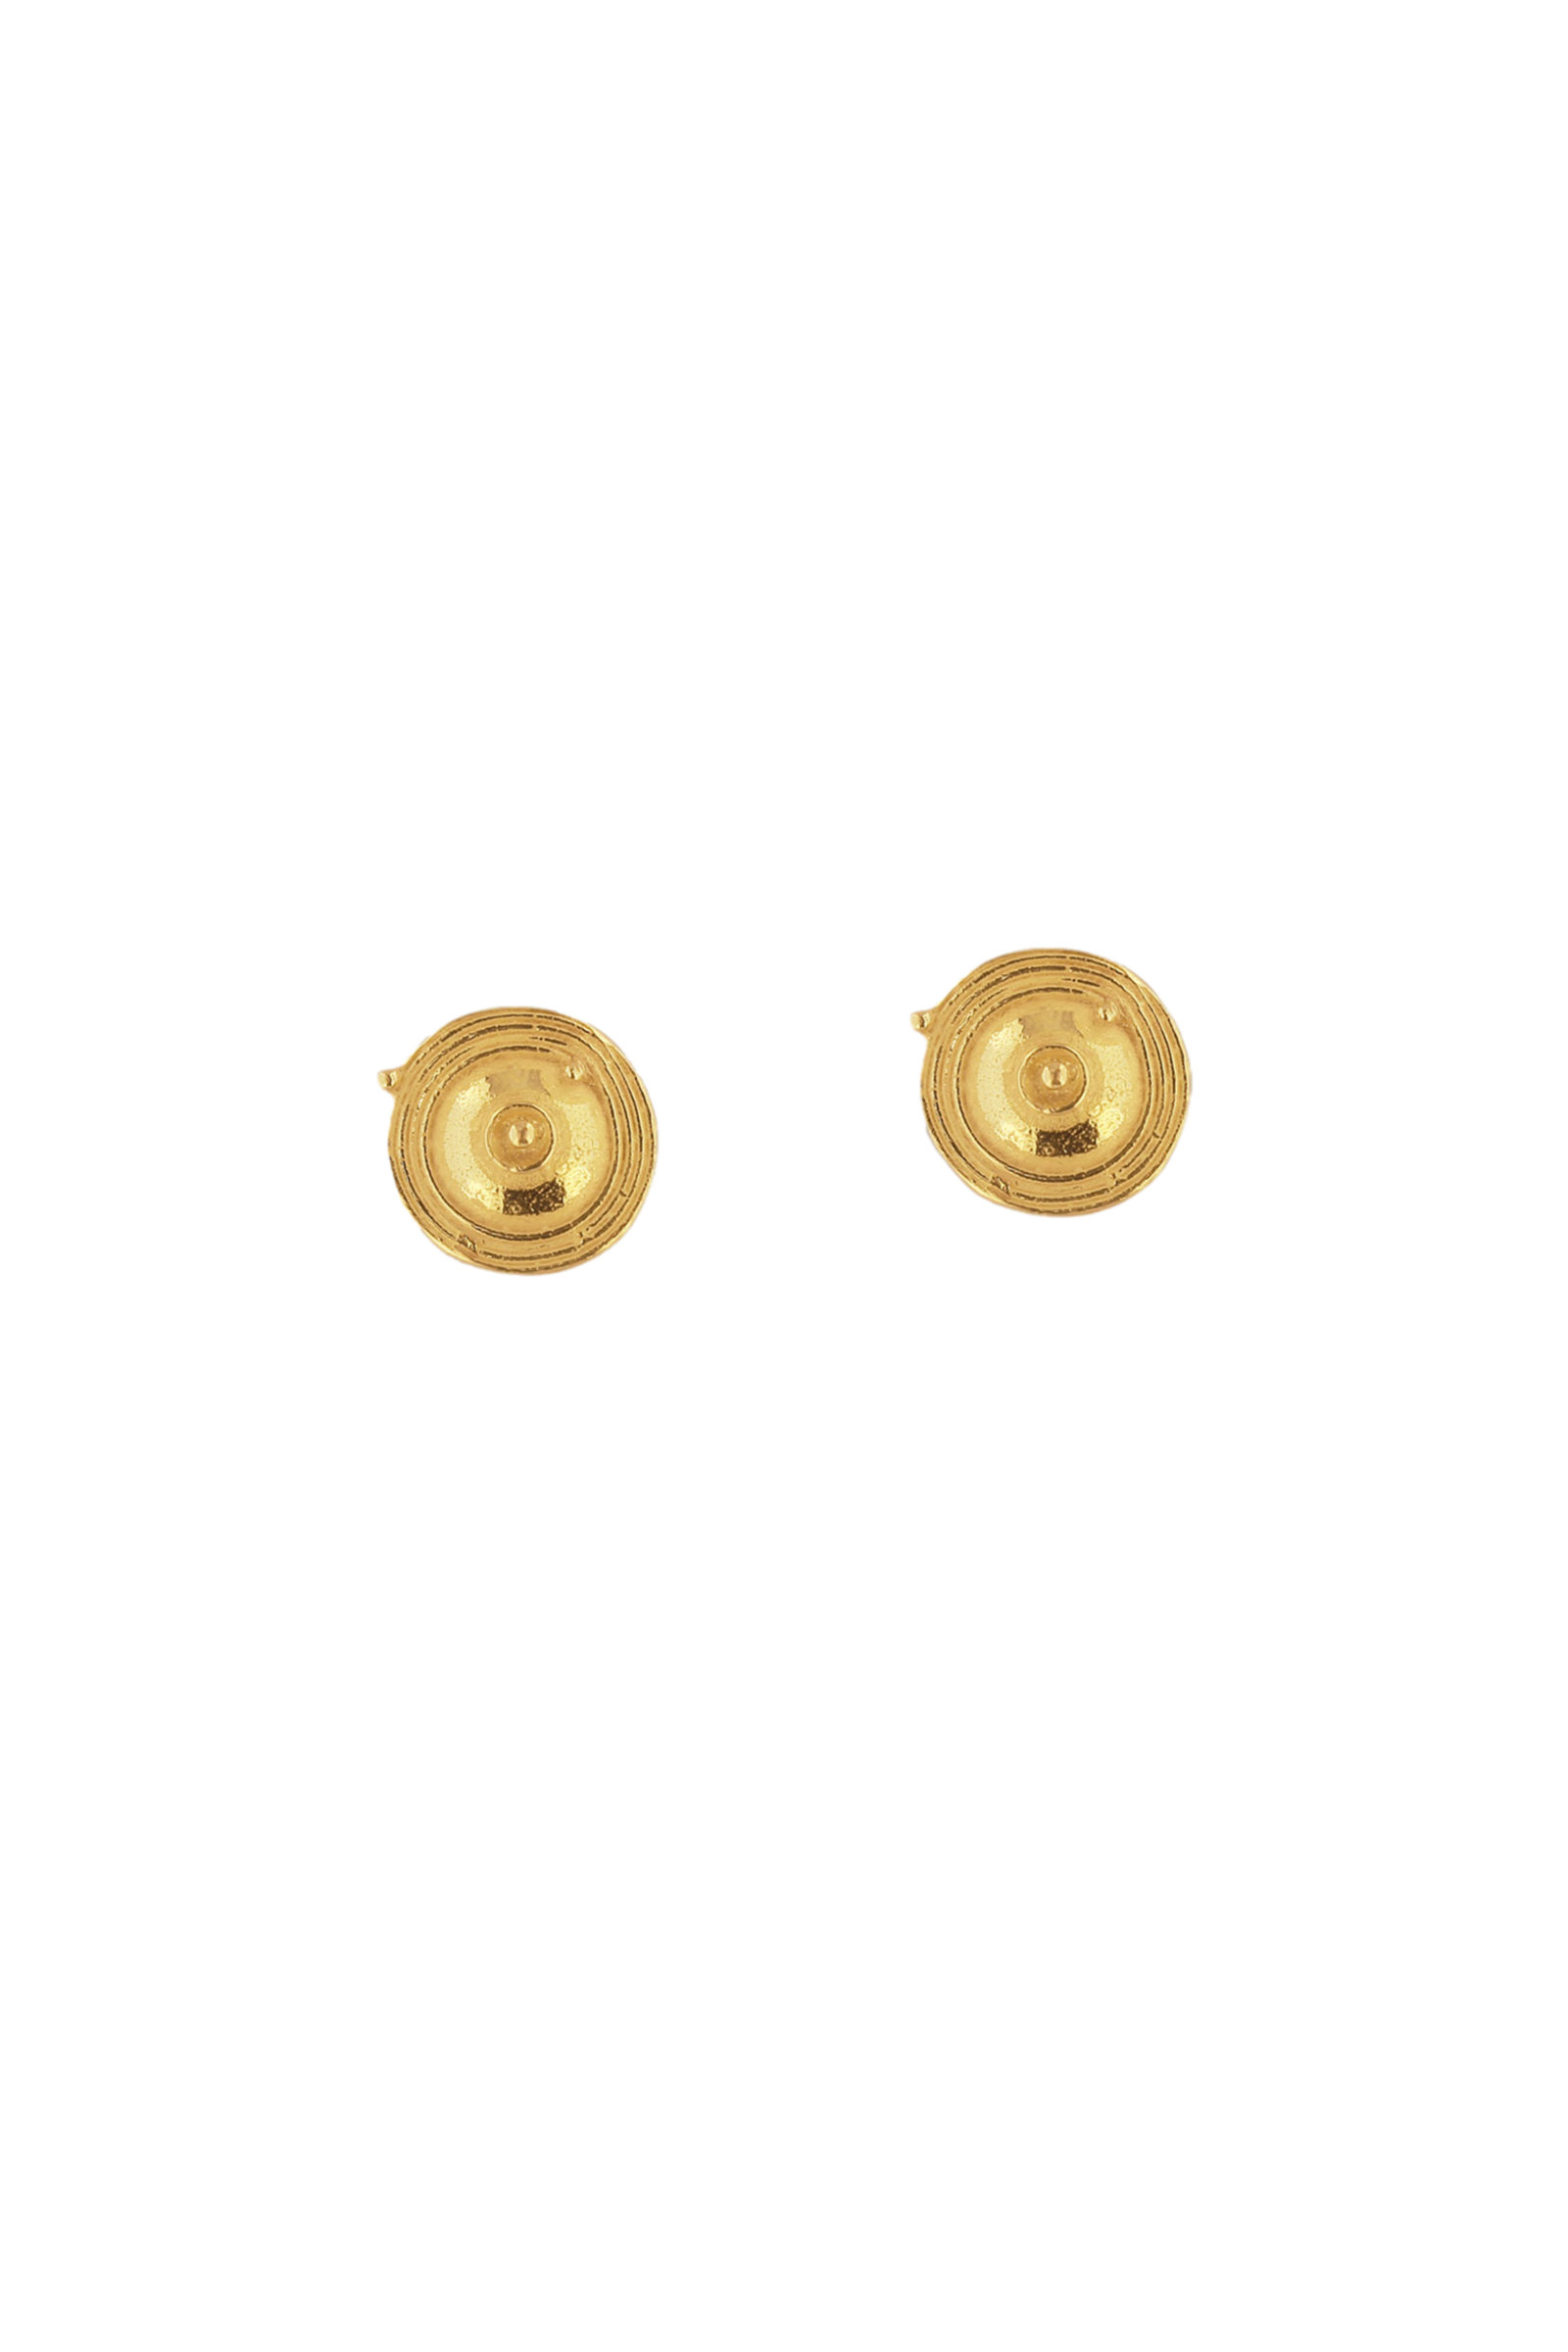 SD005A-18-Kt-Yellow-Gold-Button-Pierced-Earrings-1